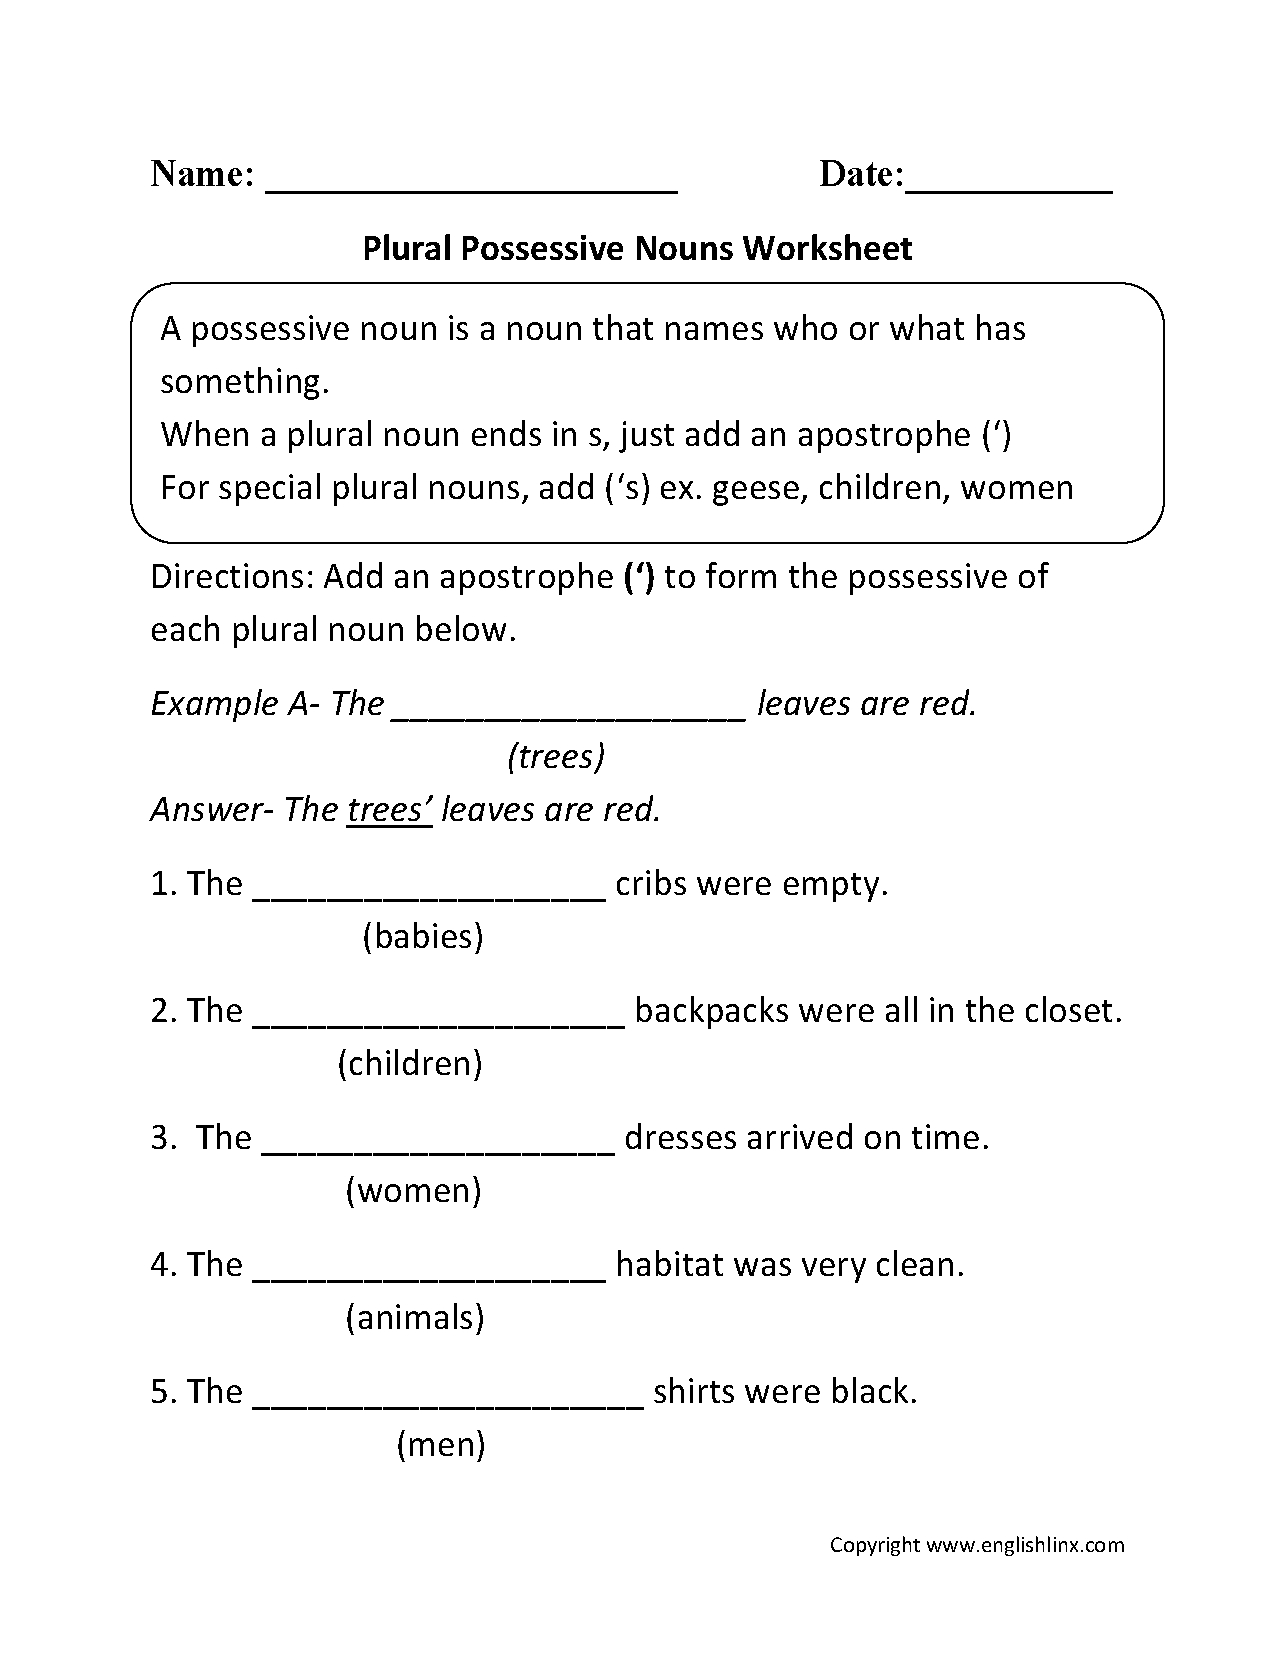 Possessive Pronouns Printable Worksheets Lexia s Blog